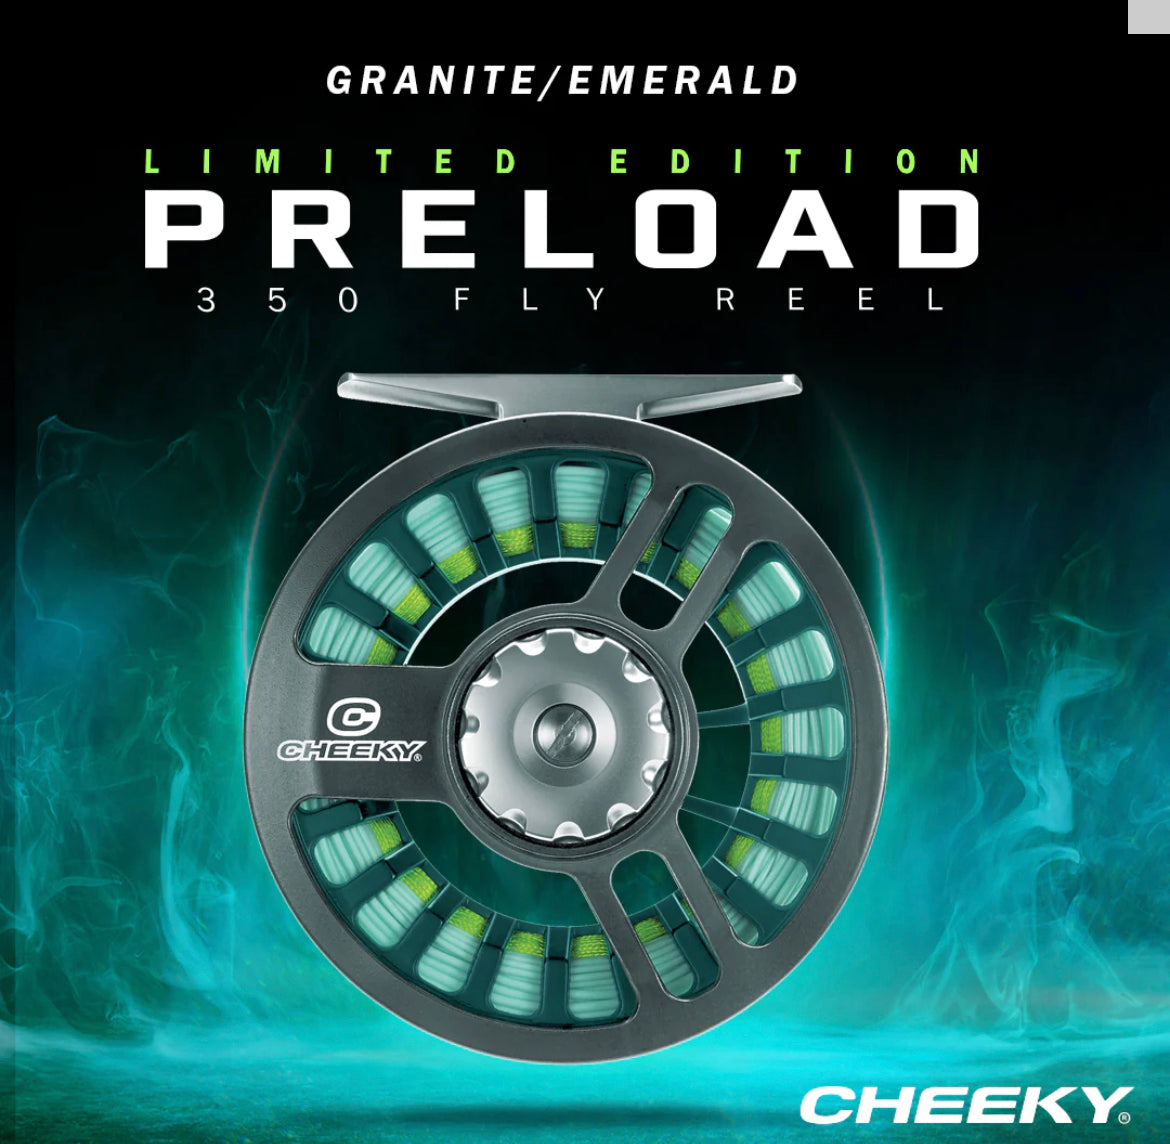 Cheeky Limited Edition 5-6 wt Granite/Emerald prespool reel – The